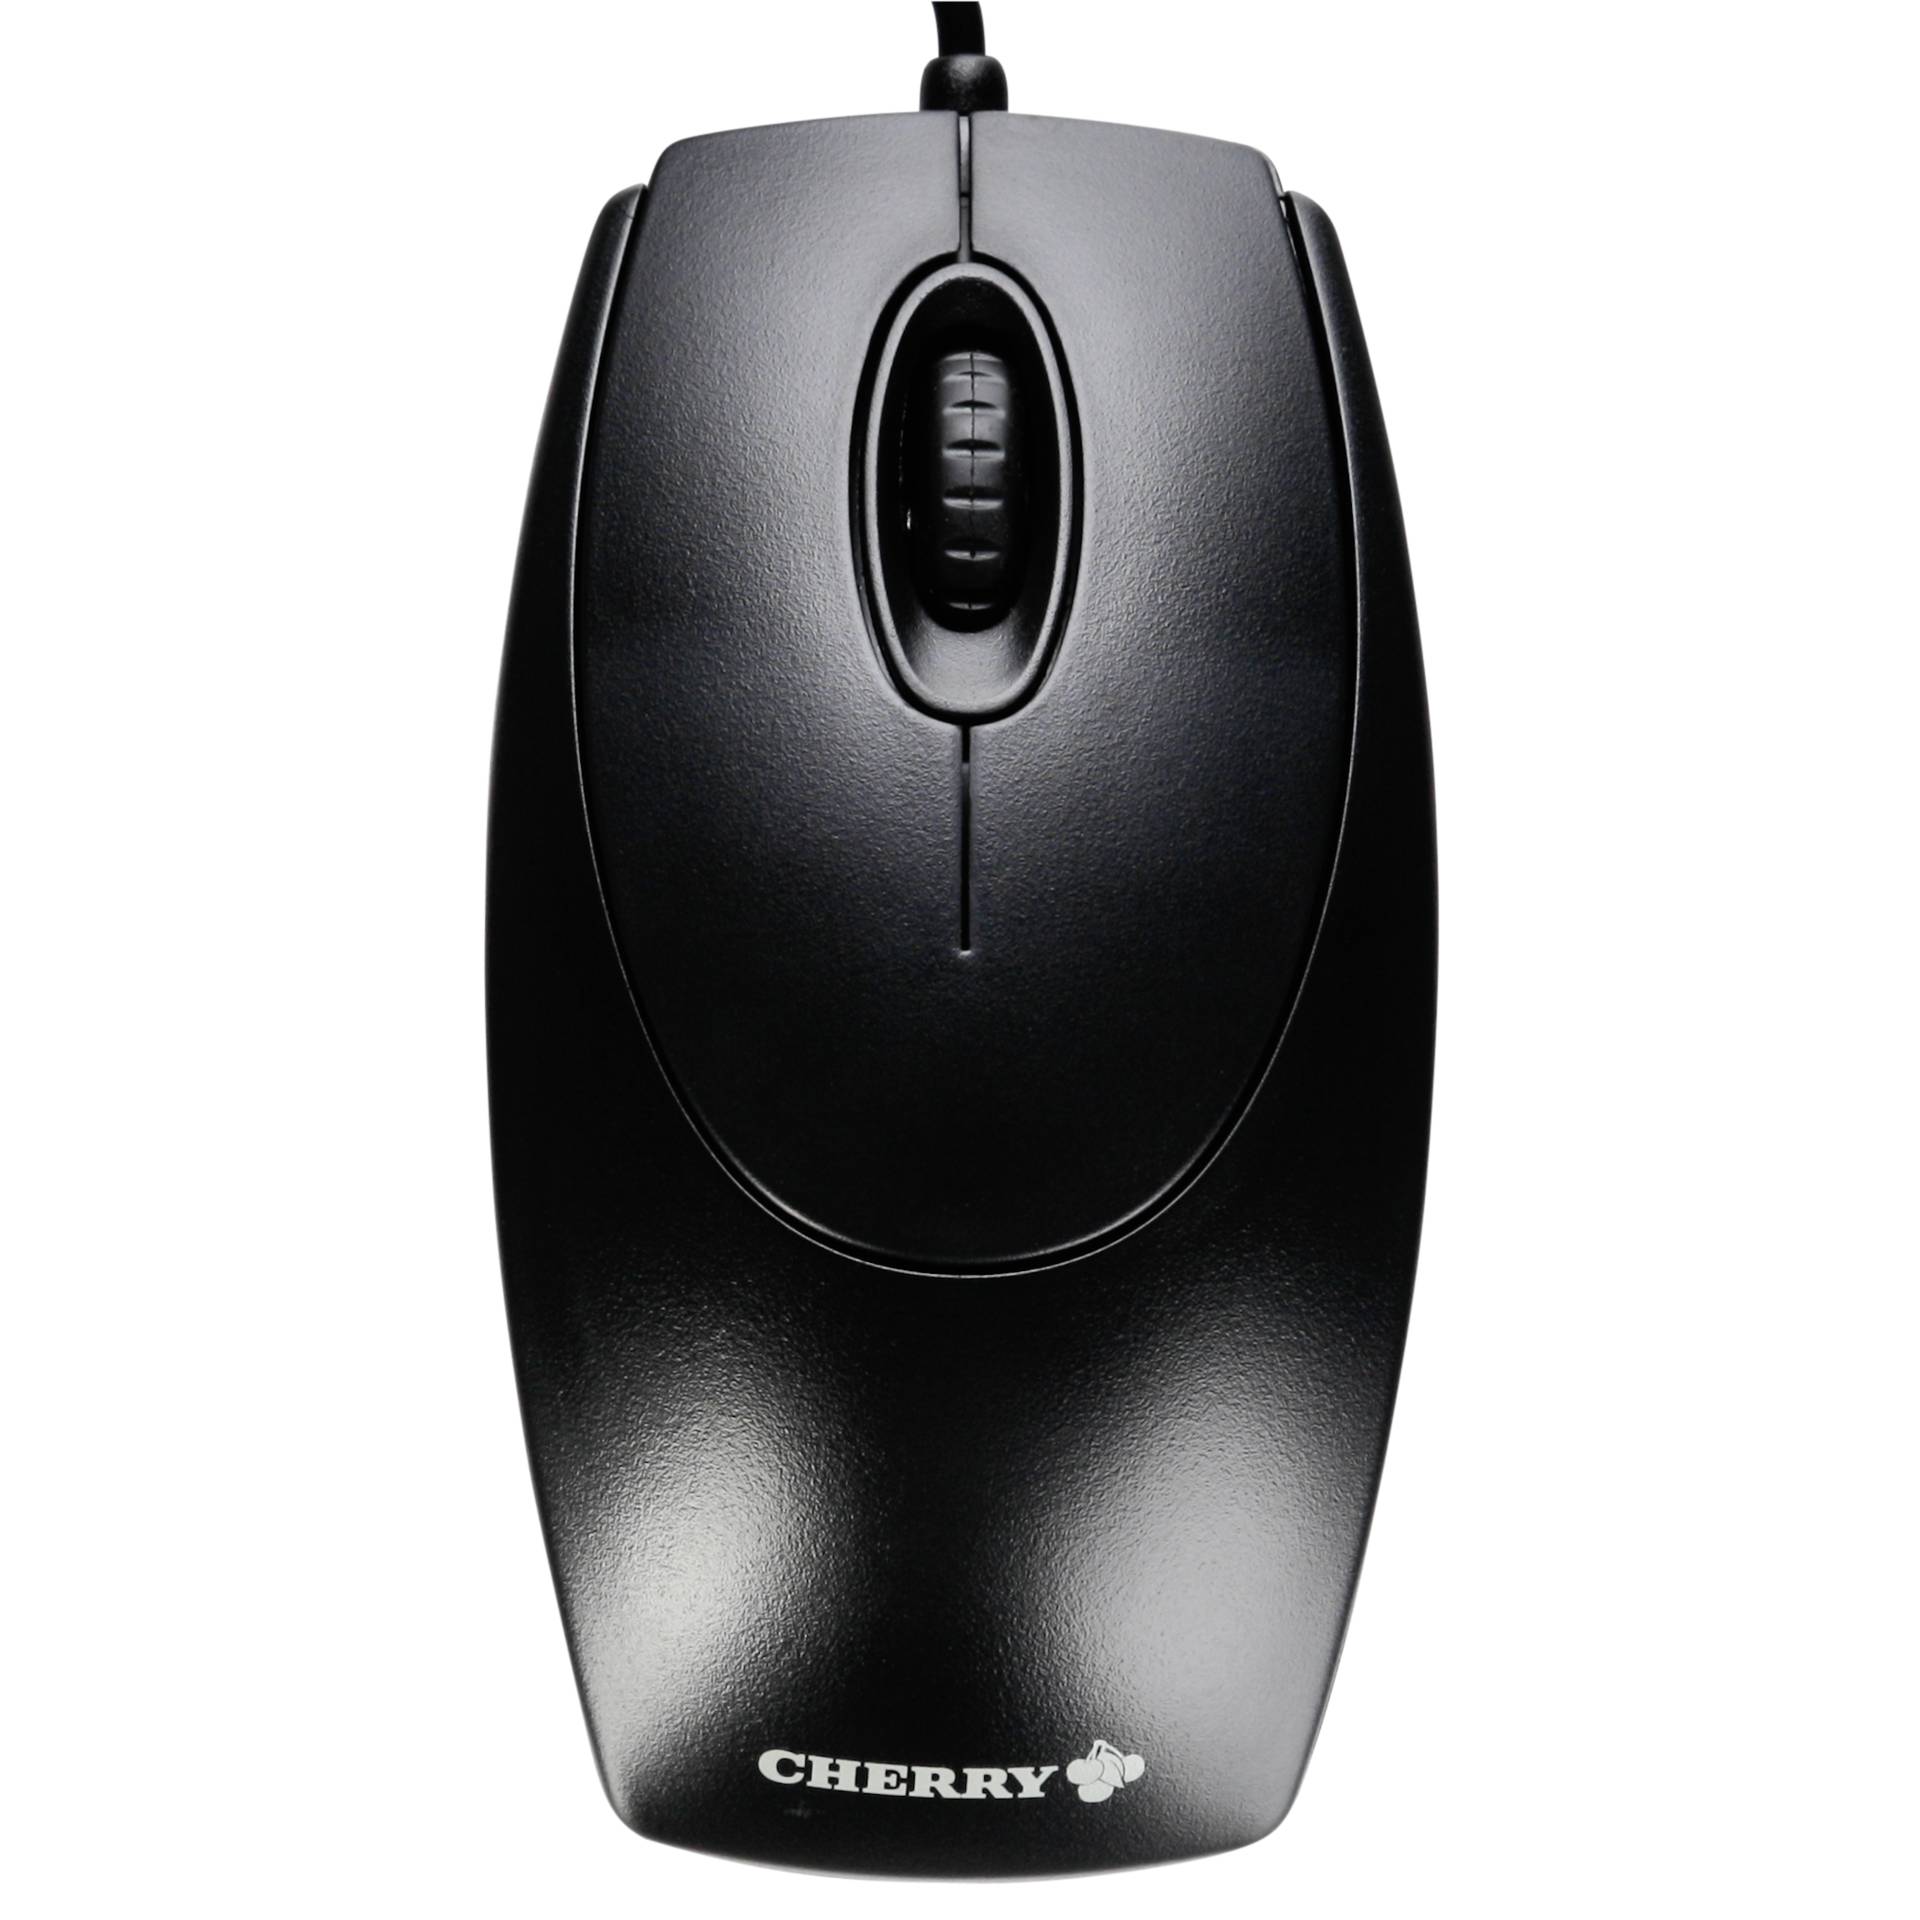 Cherry M-5450 Wheel Mouse optical nero USB / PS2 bulk